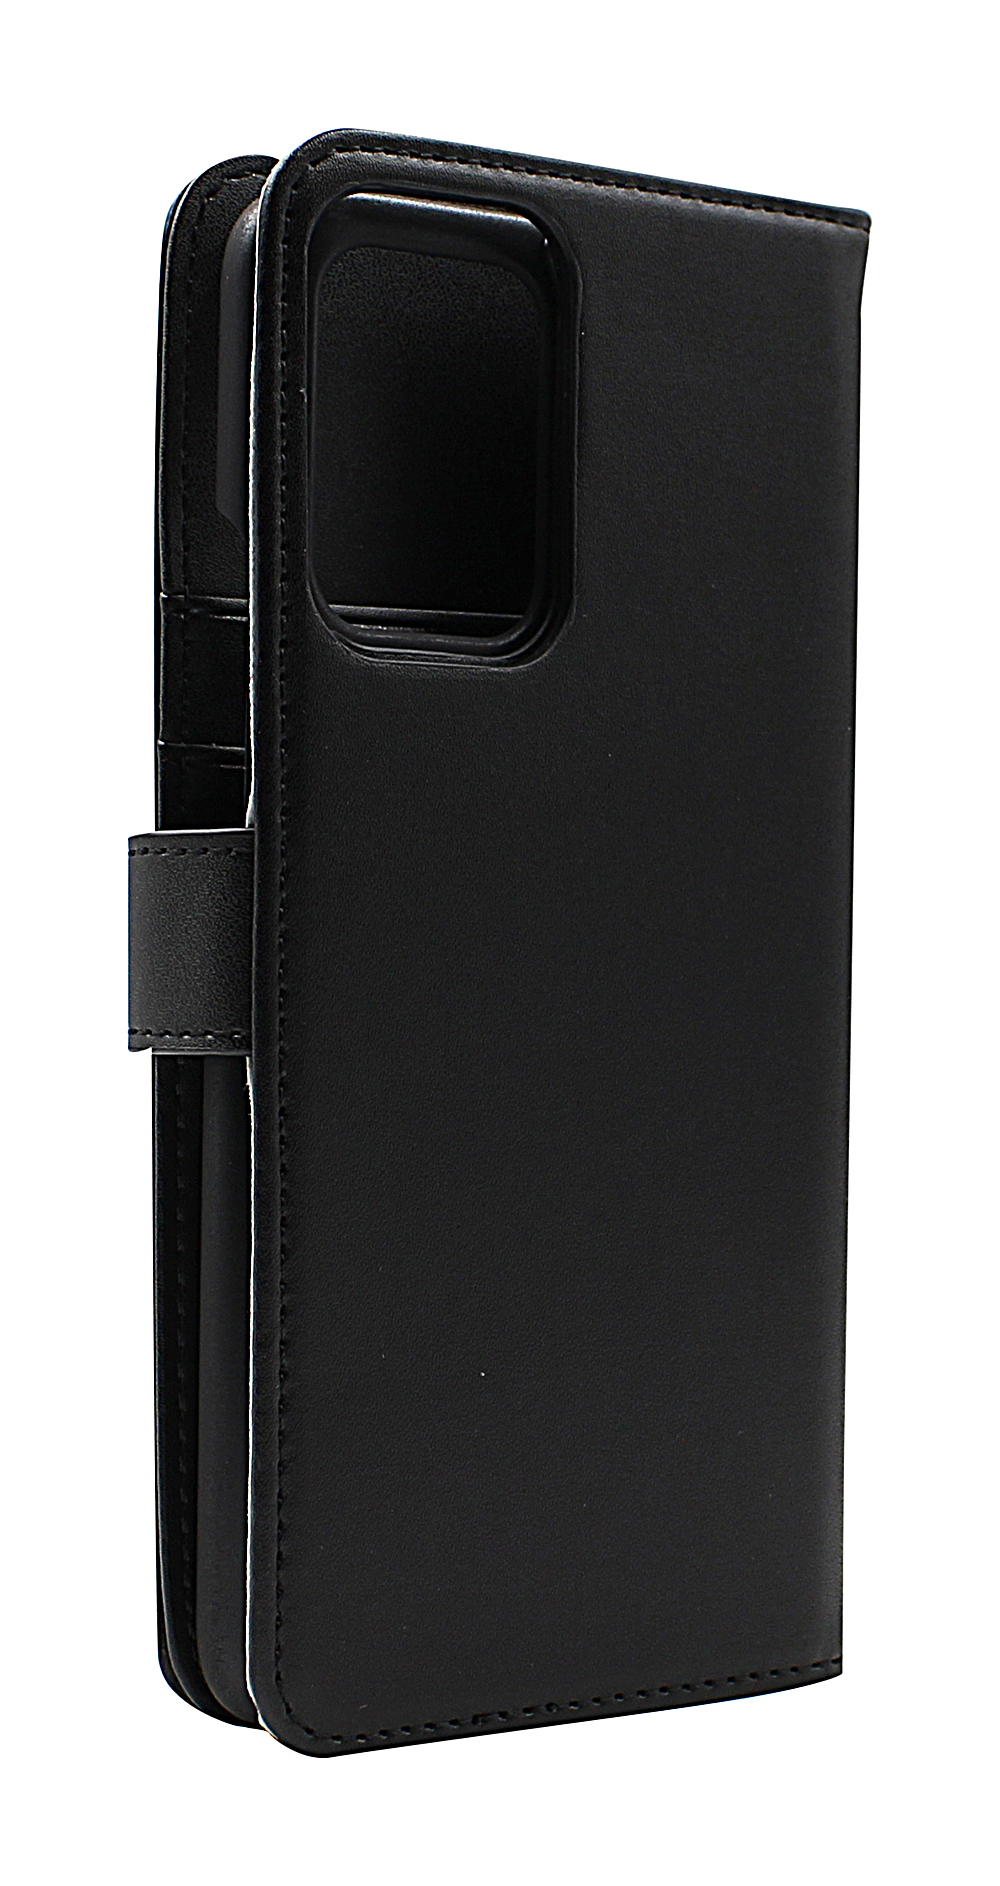 Skimblocker Magnet Wallet Xiaomi Redmi Note 10 Pro